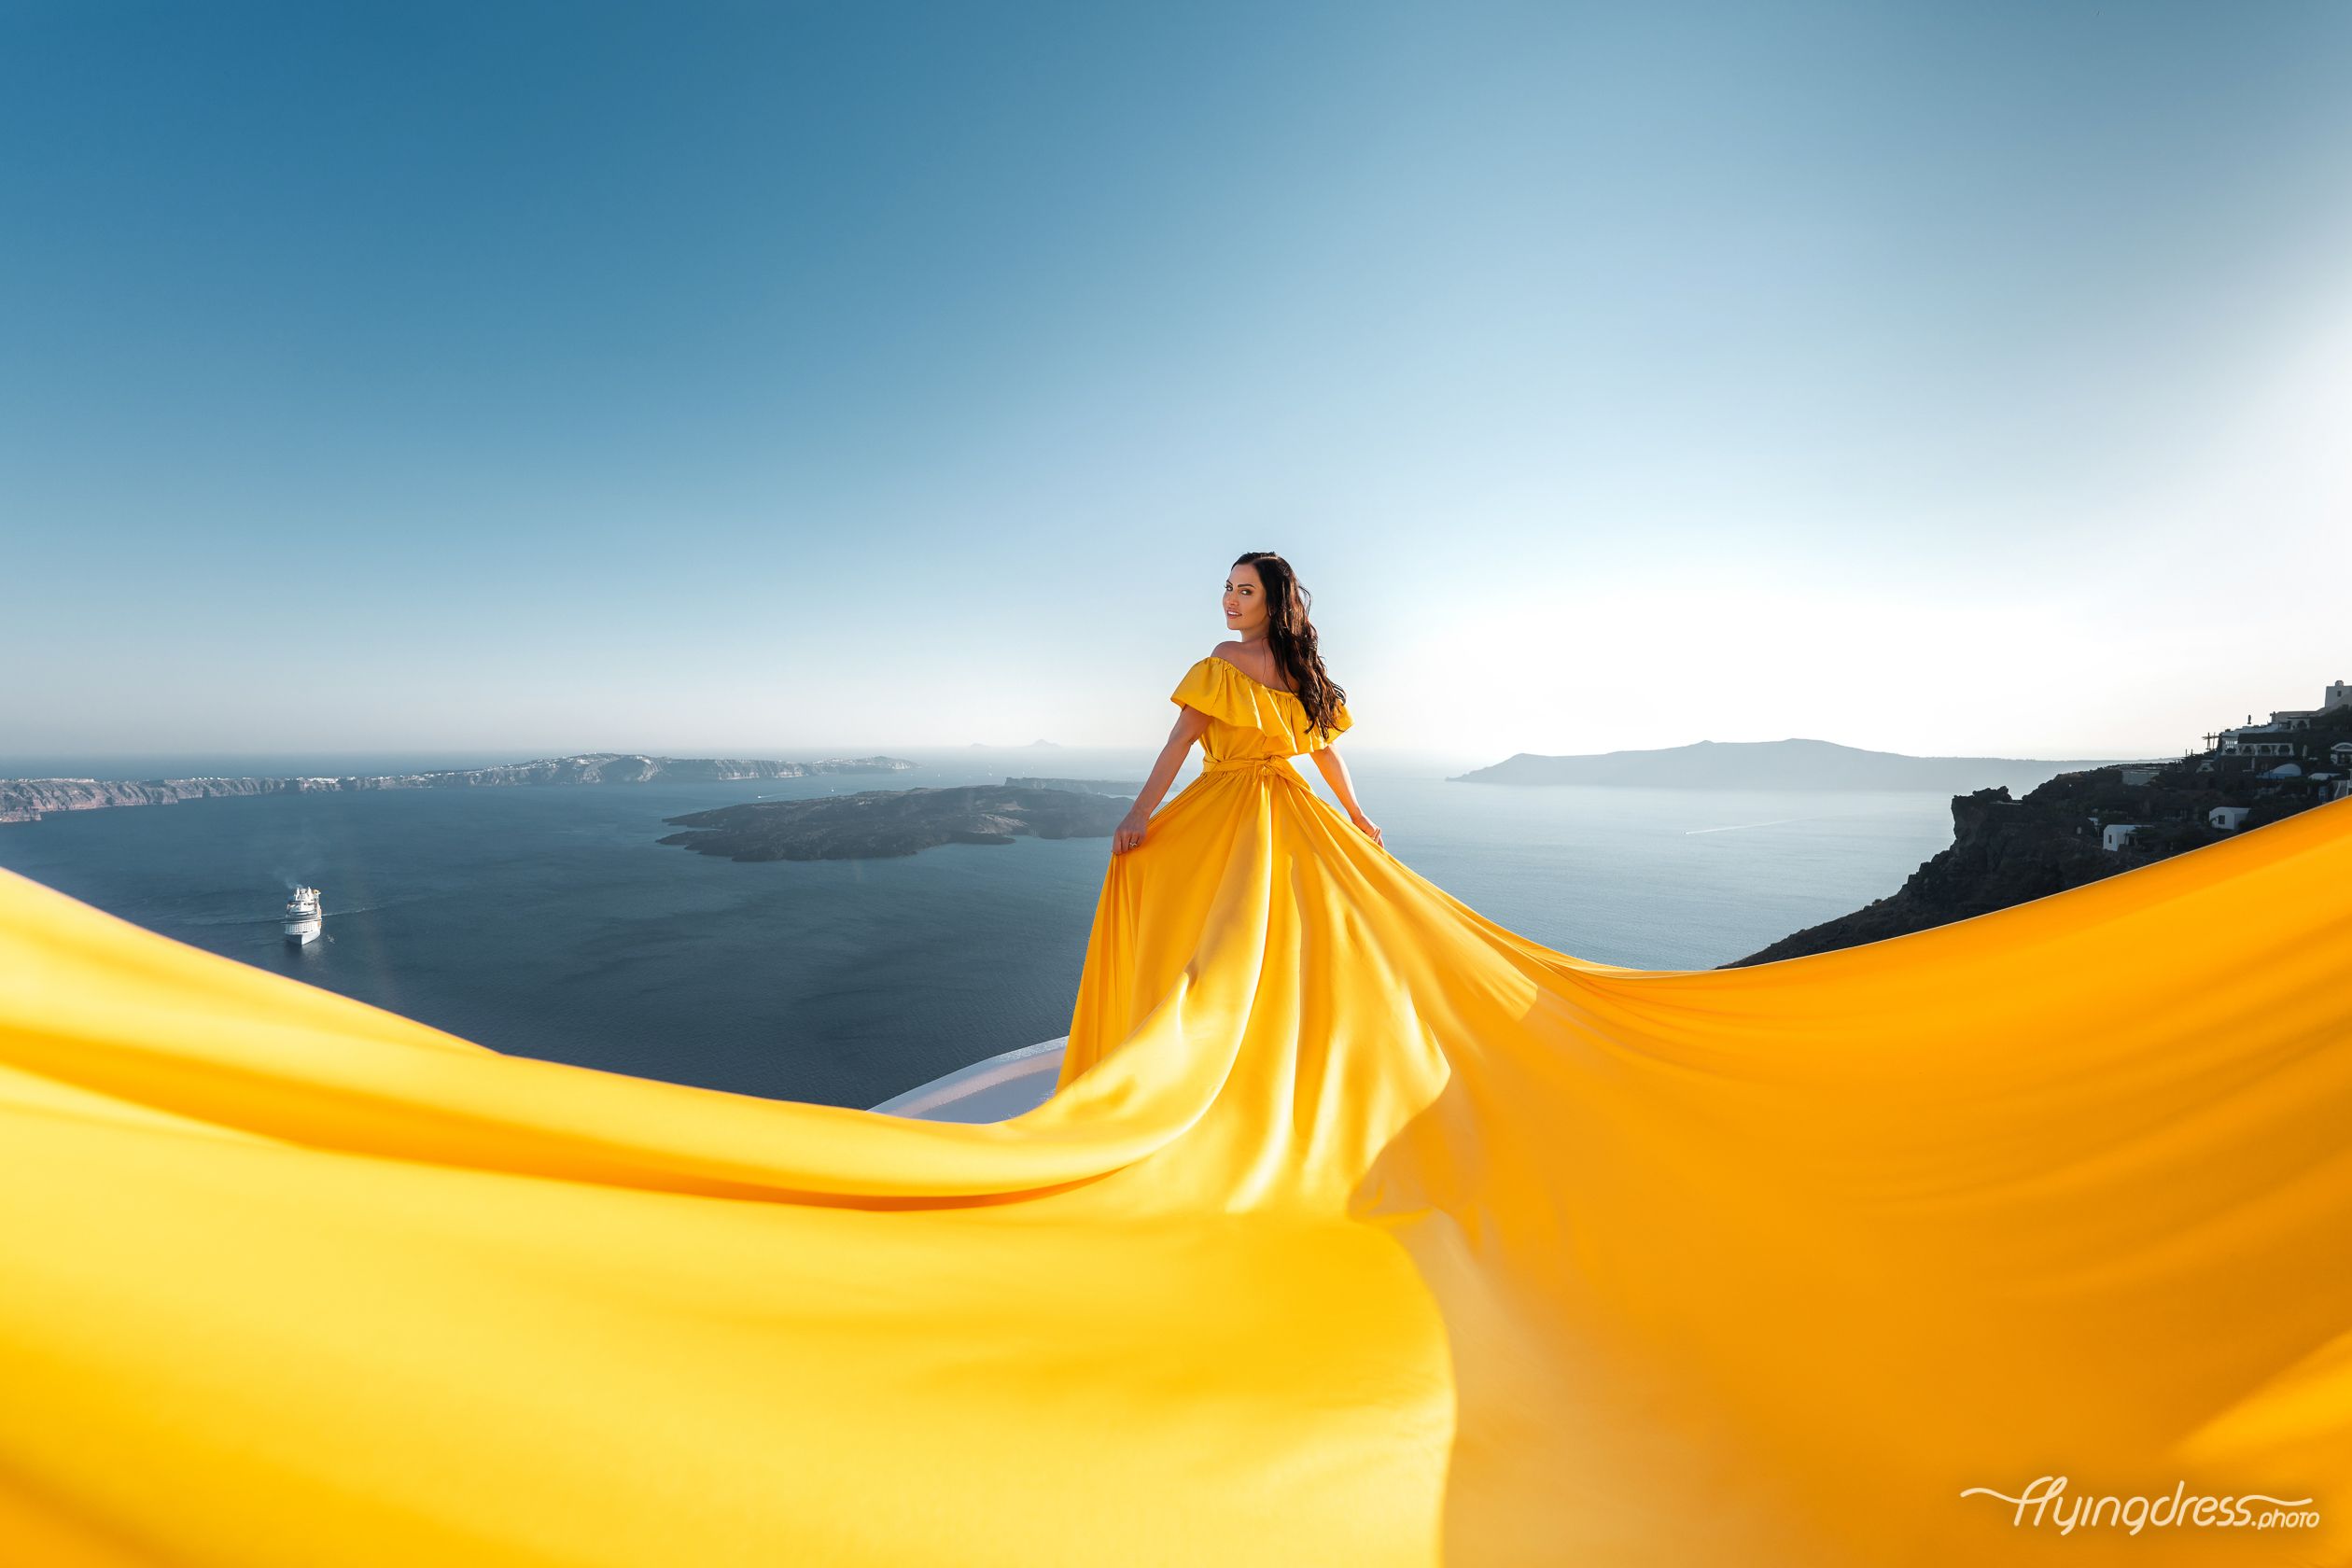 Flying Santorini dress photoshoot with a yellow dress